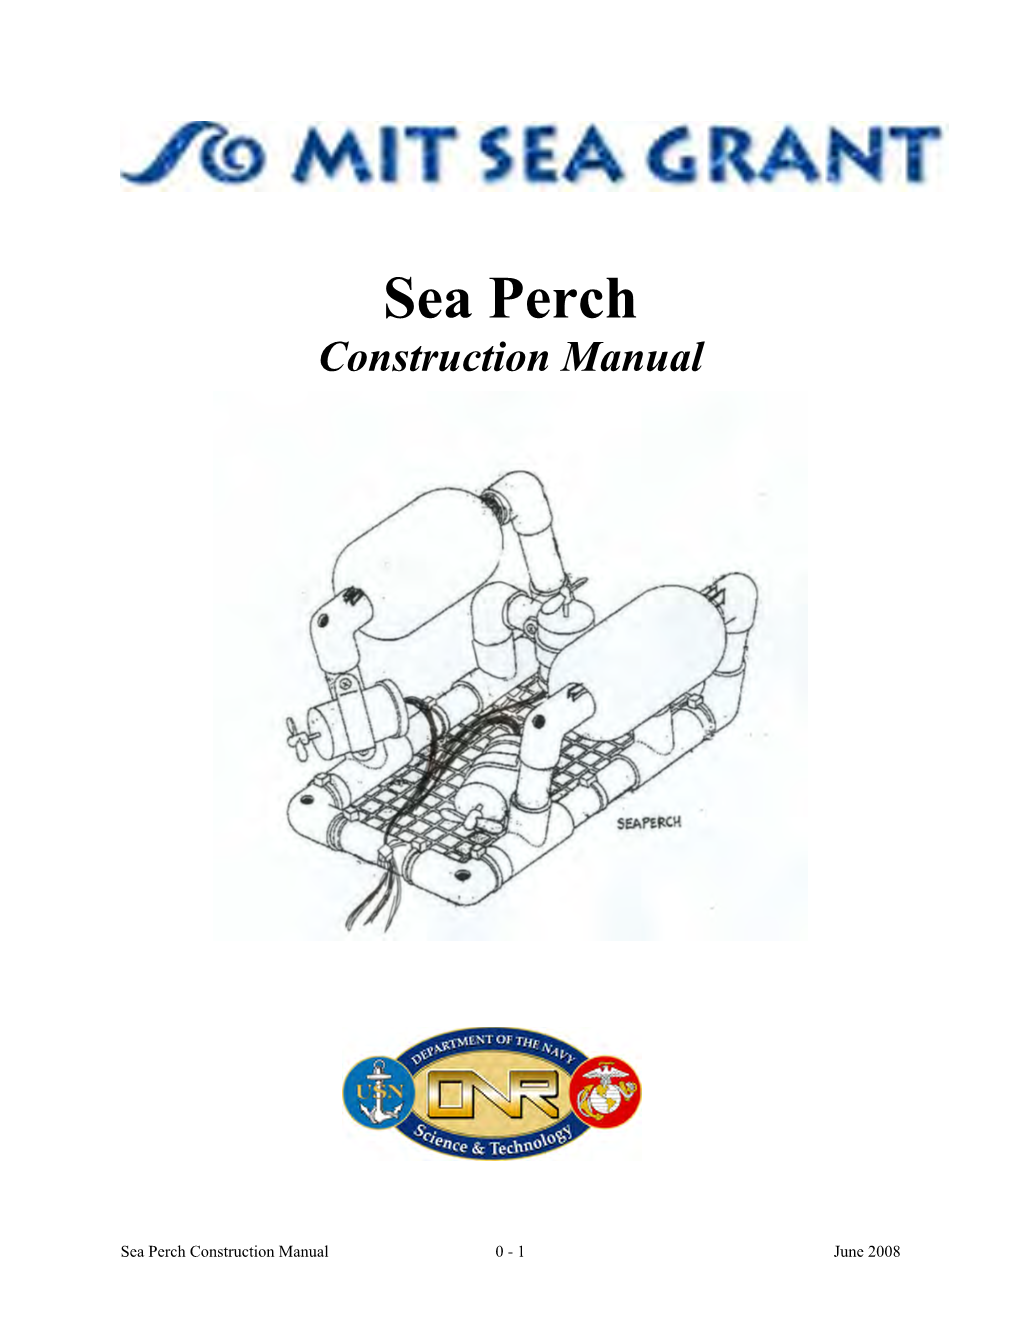 Sea Perch Construction Manual